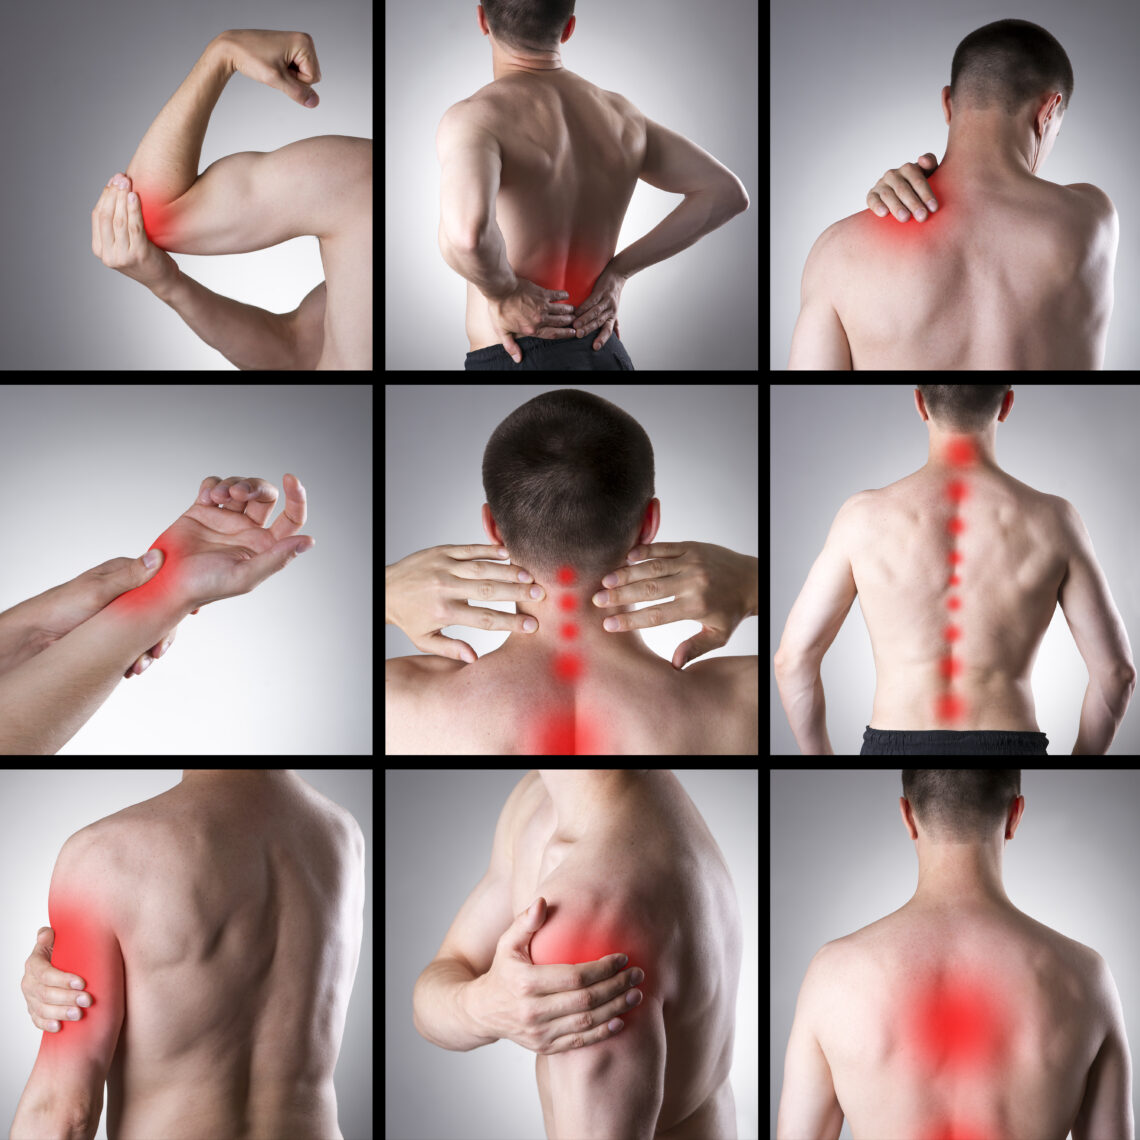 Shoulder Pain - Eastshore Healthcare